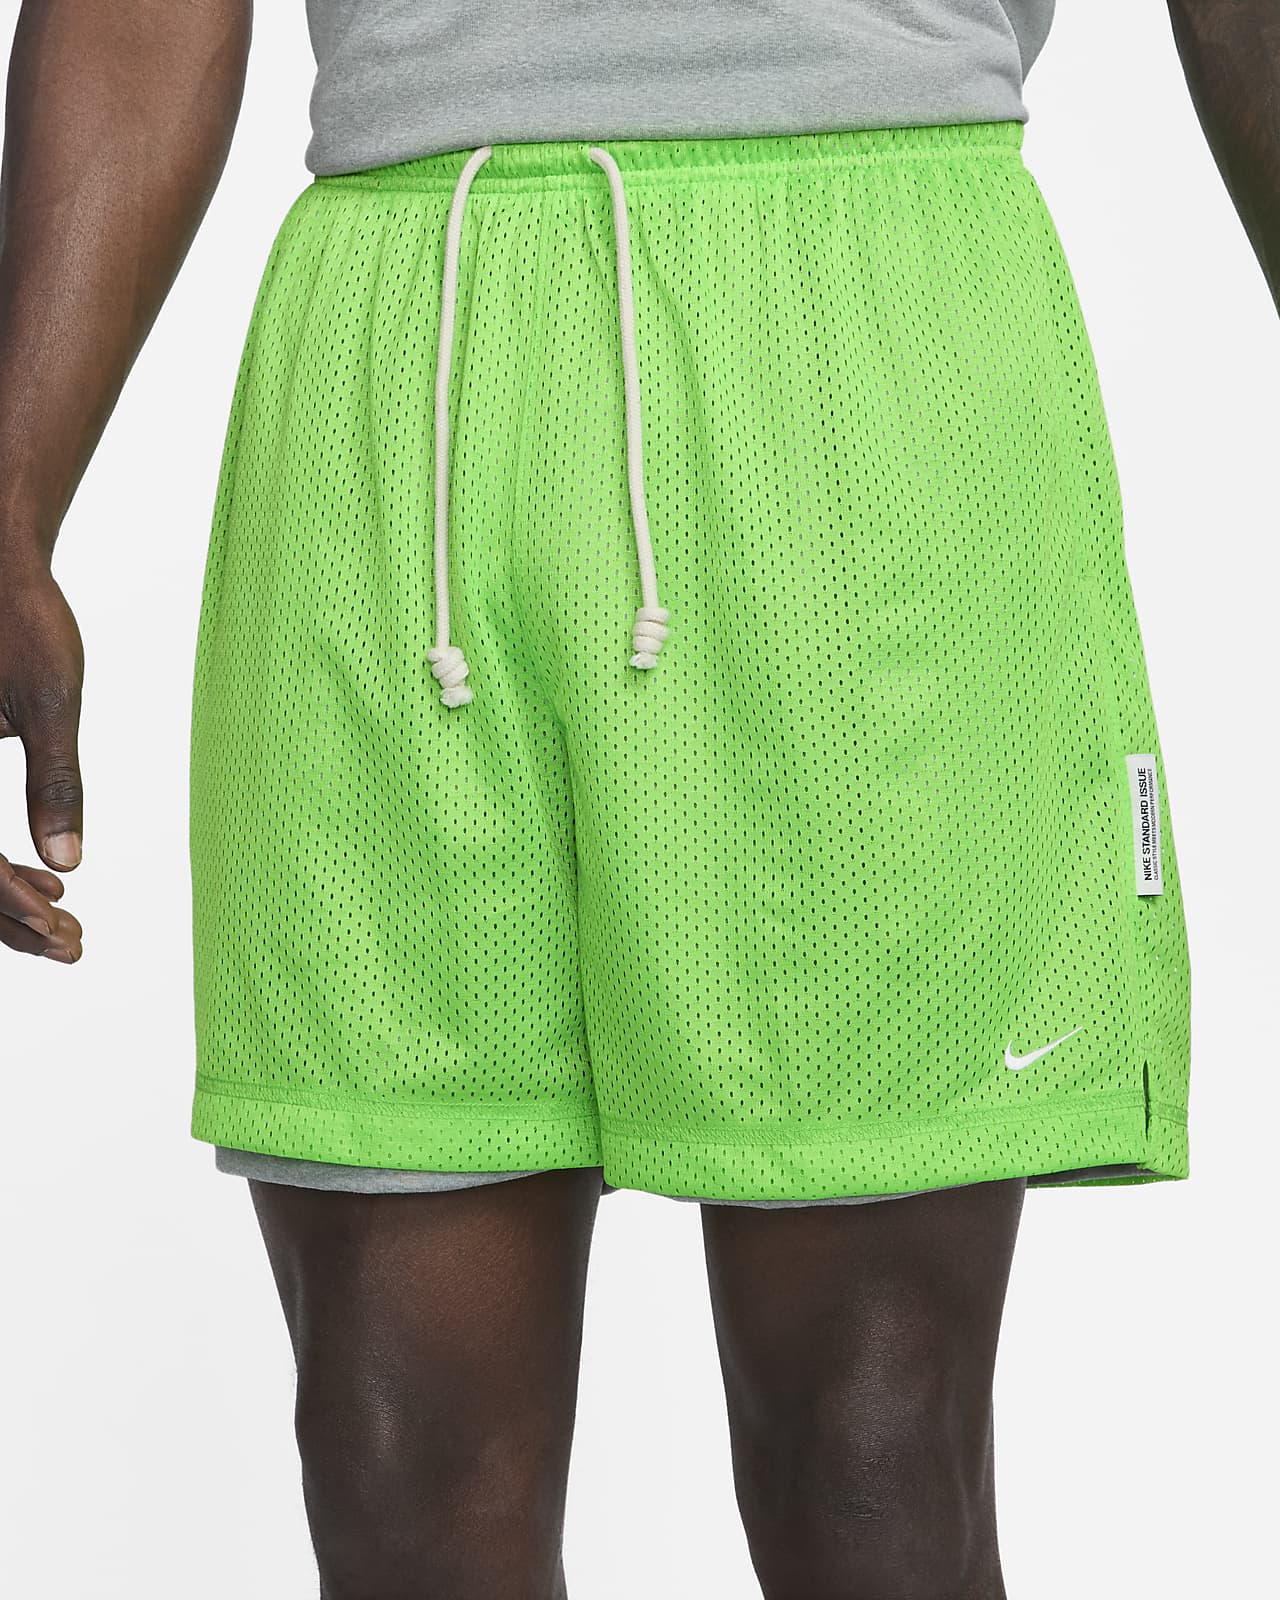 Nike Dri-FIT Standard Issue Men's Basketball Pants.